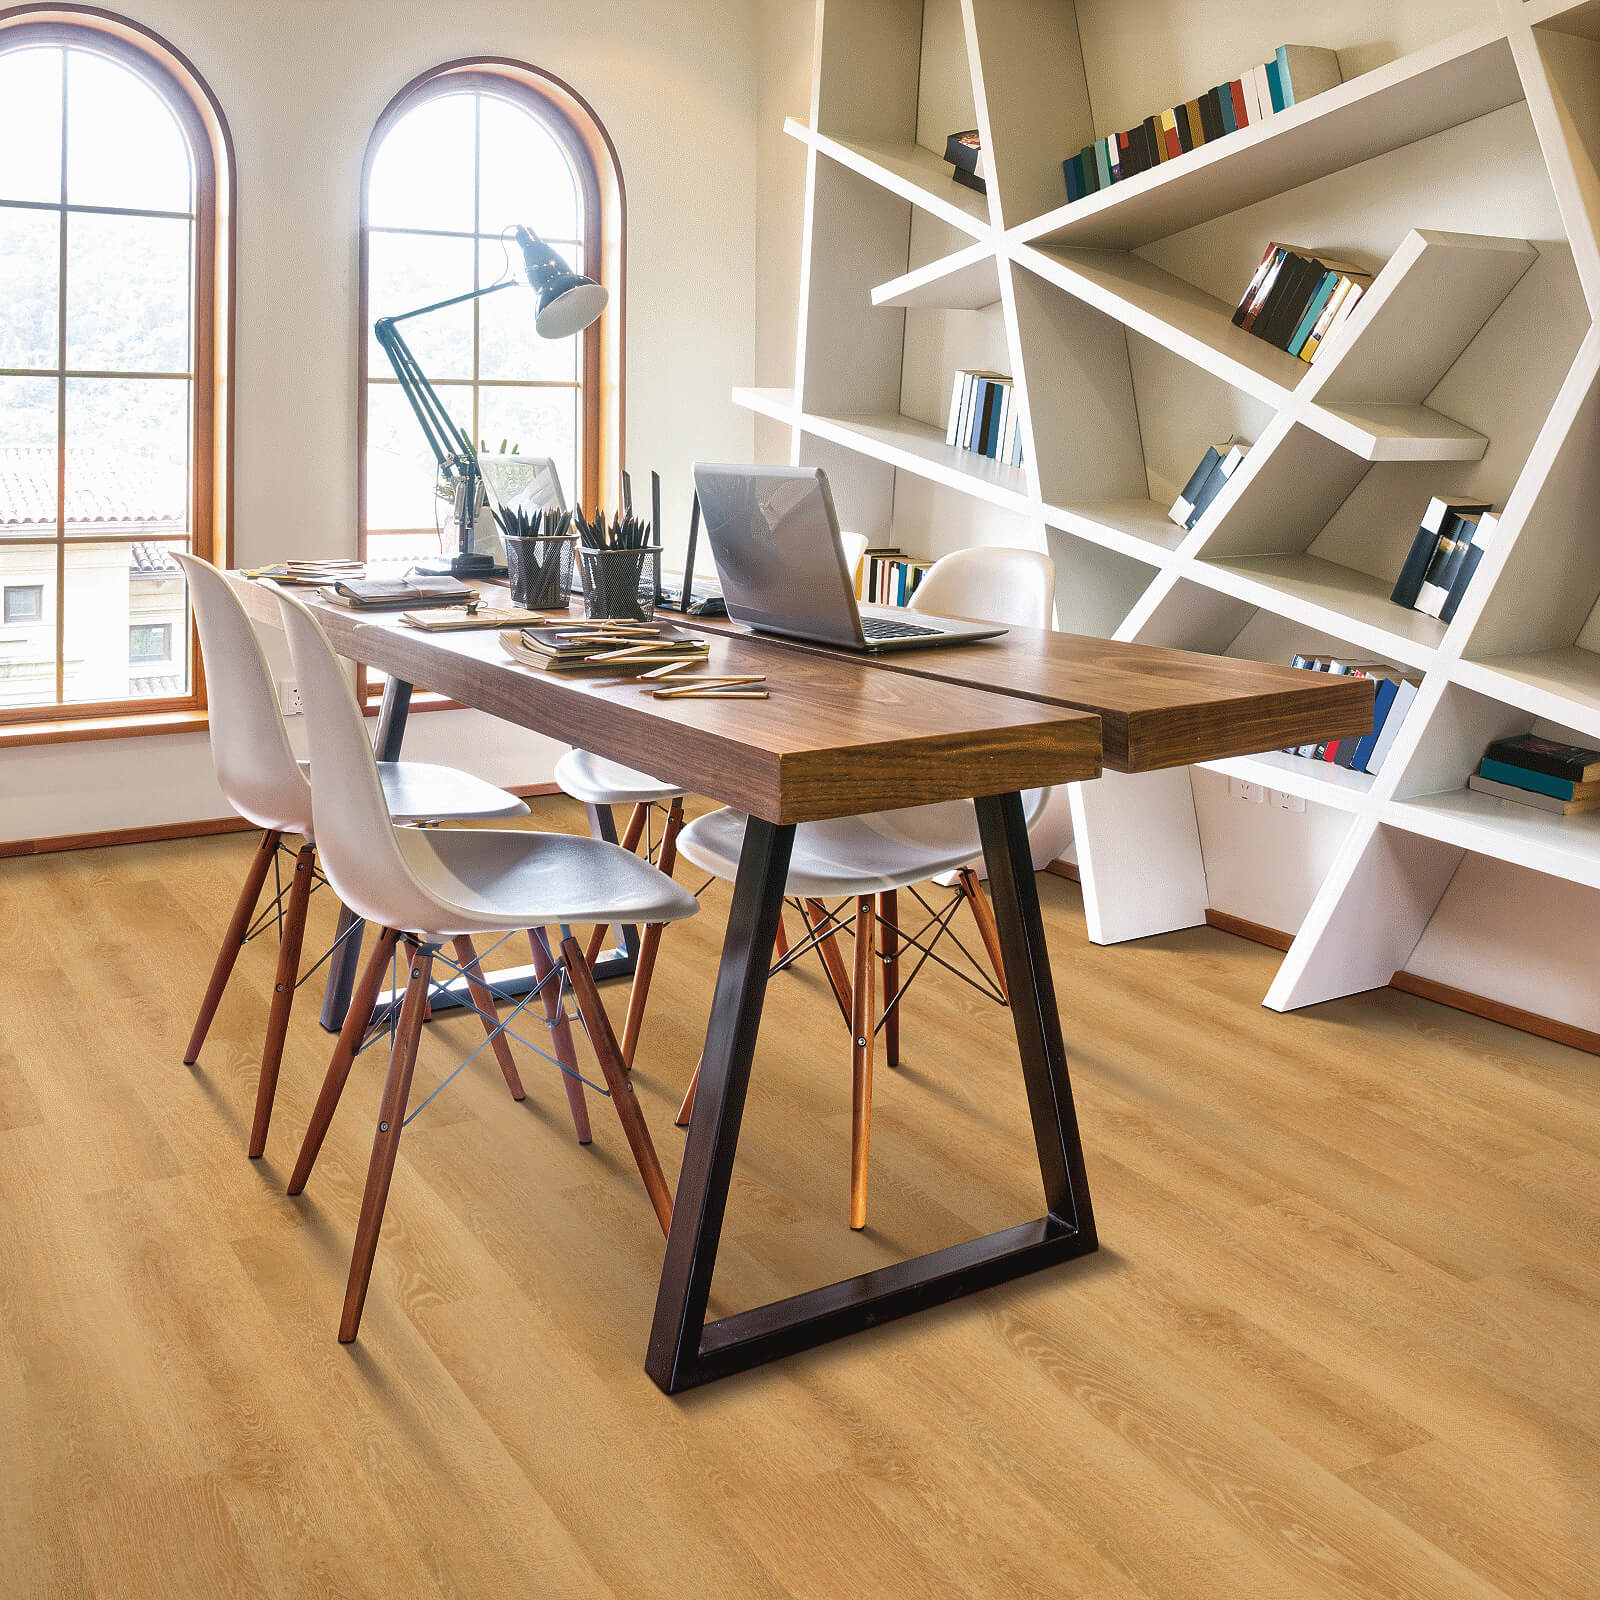 Vinyl flooring for study room | CarpetsPlus Design Showroom of Hutchinson 